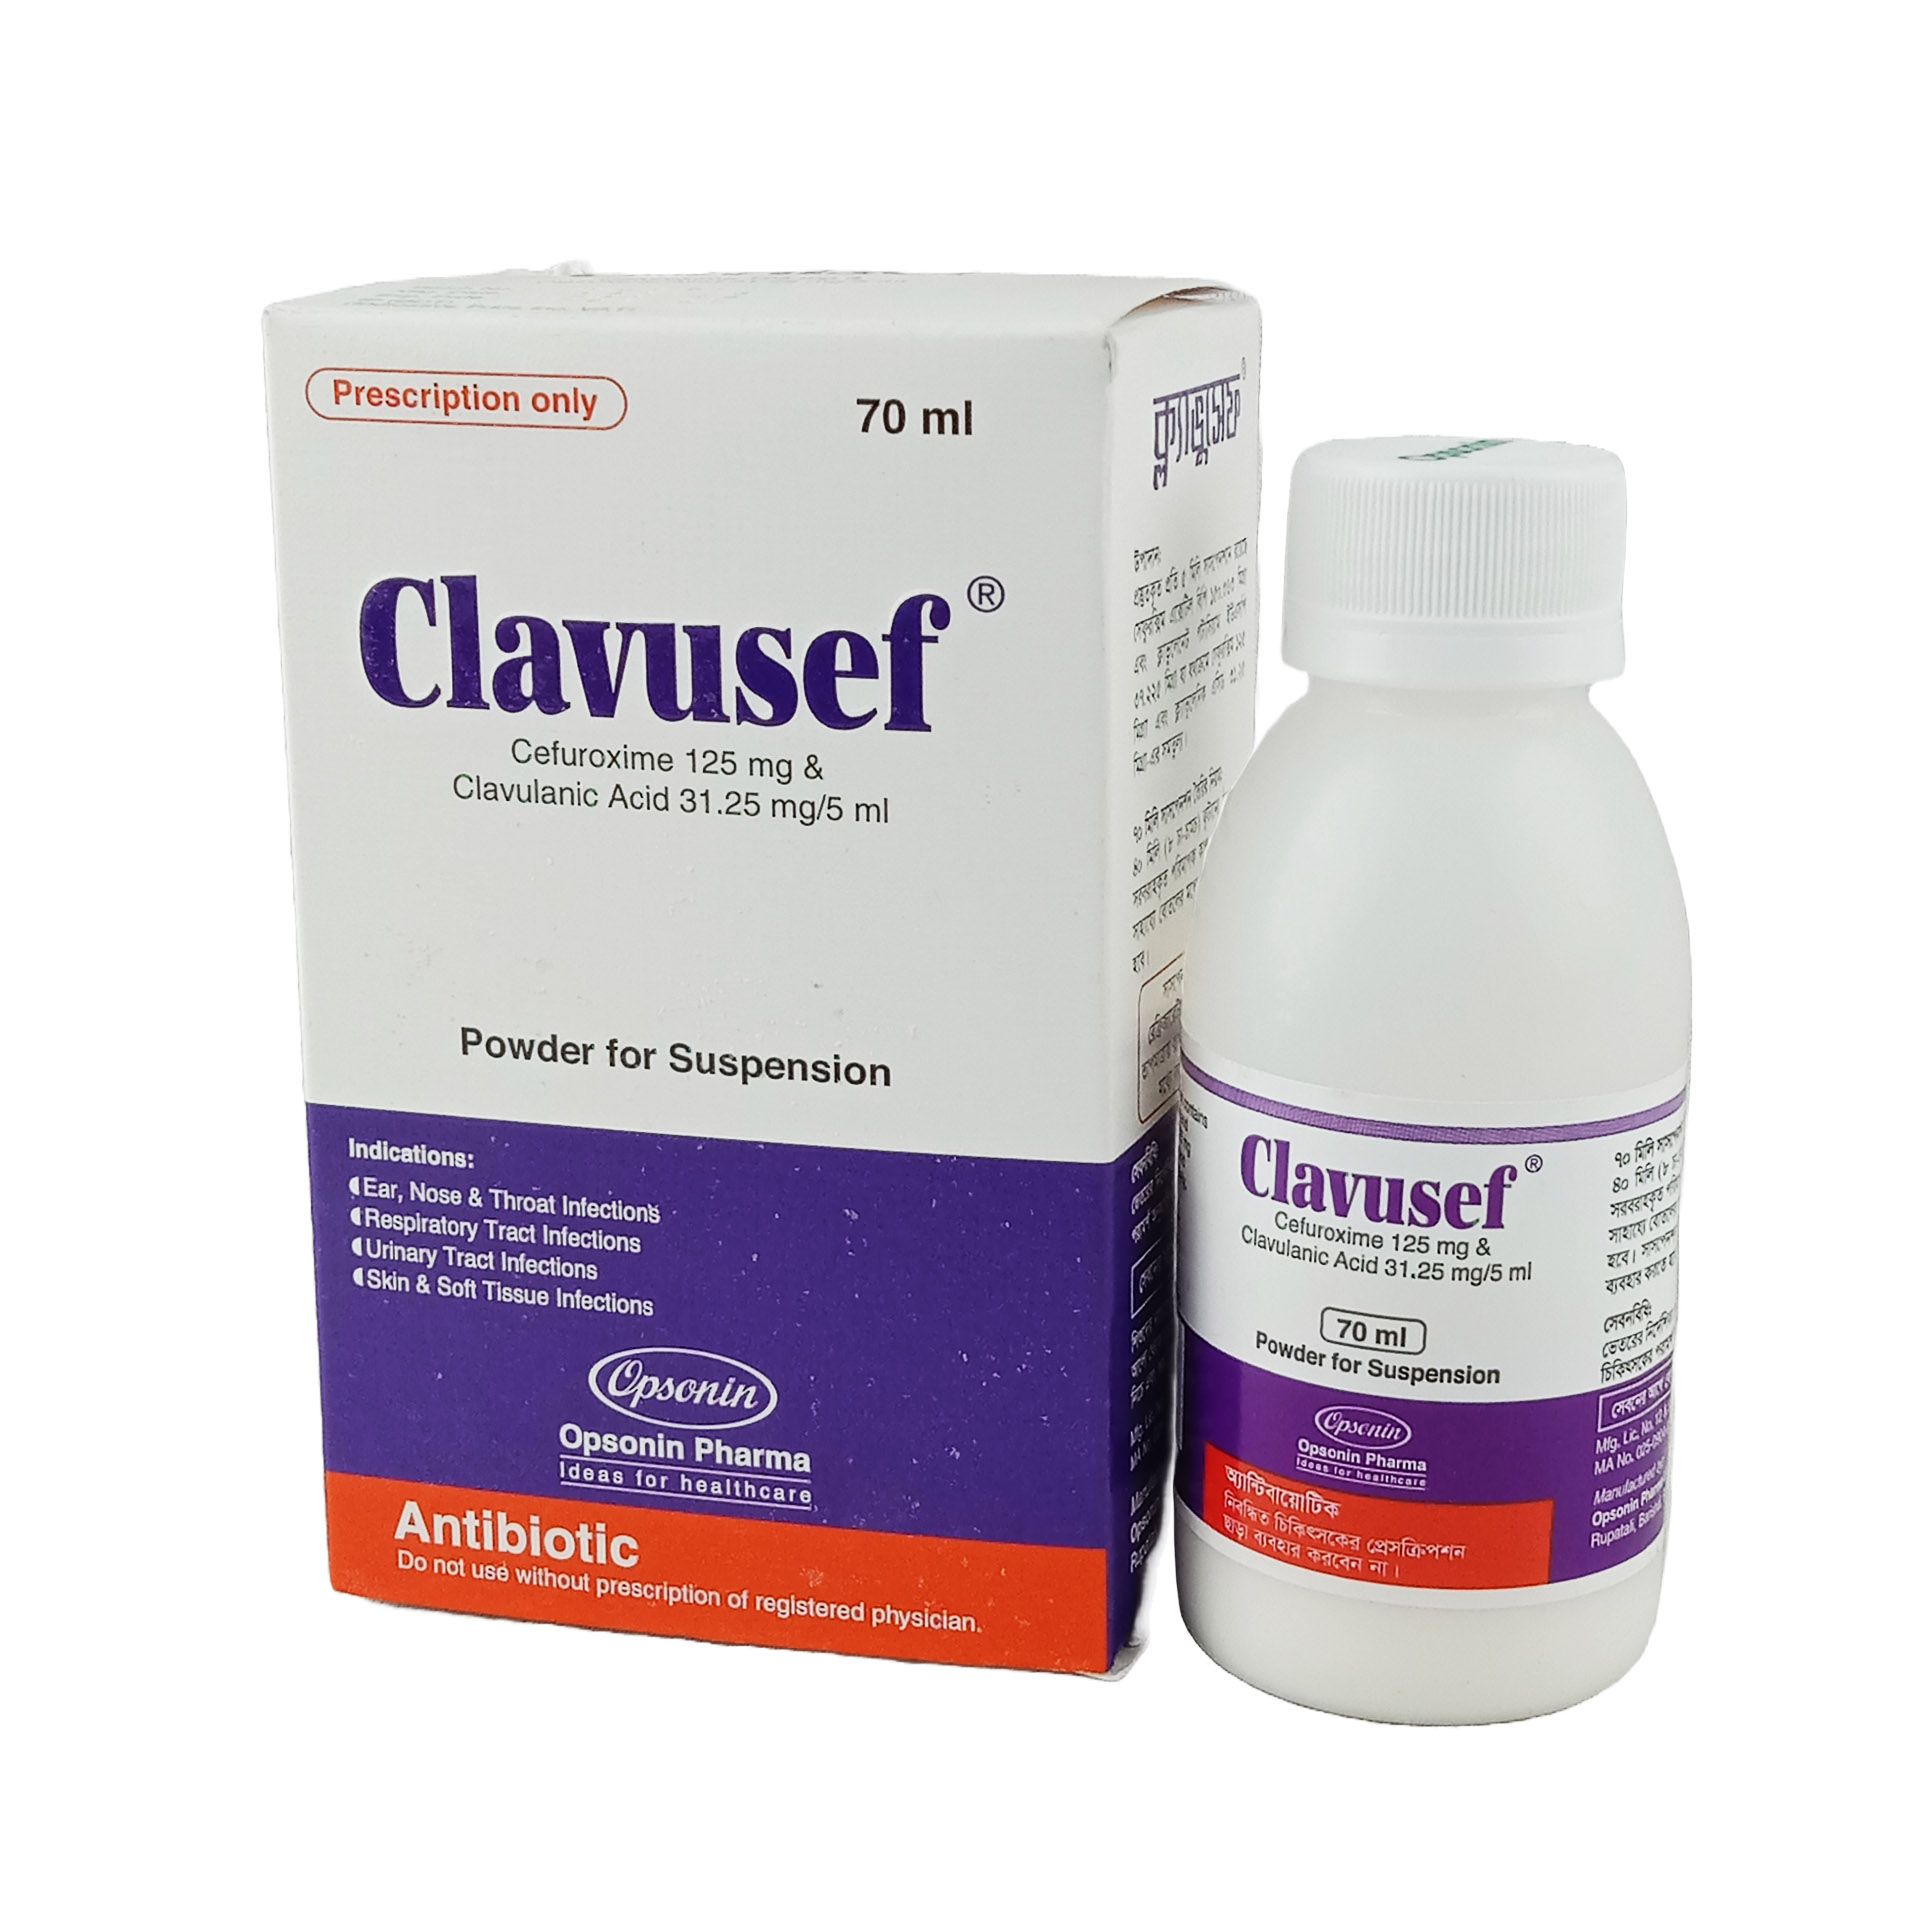 Clavusef 125mg+31.25mg/5ml Powder for Suspension